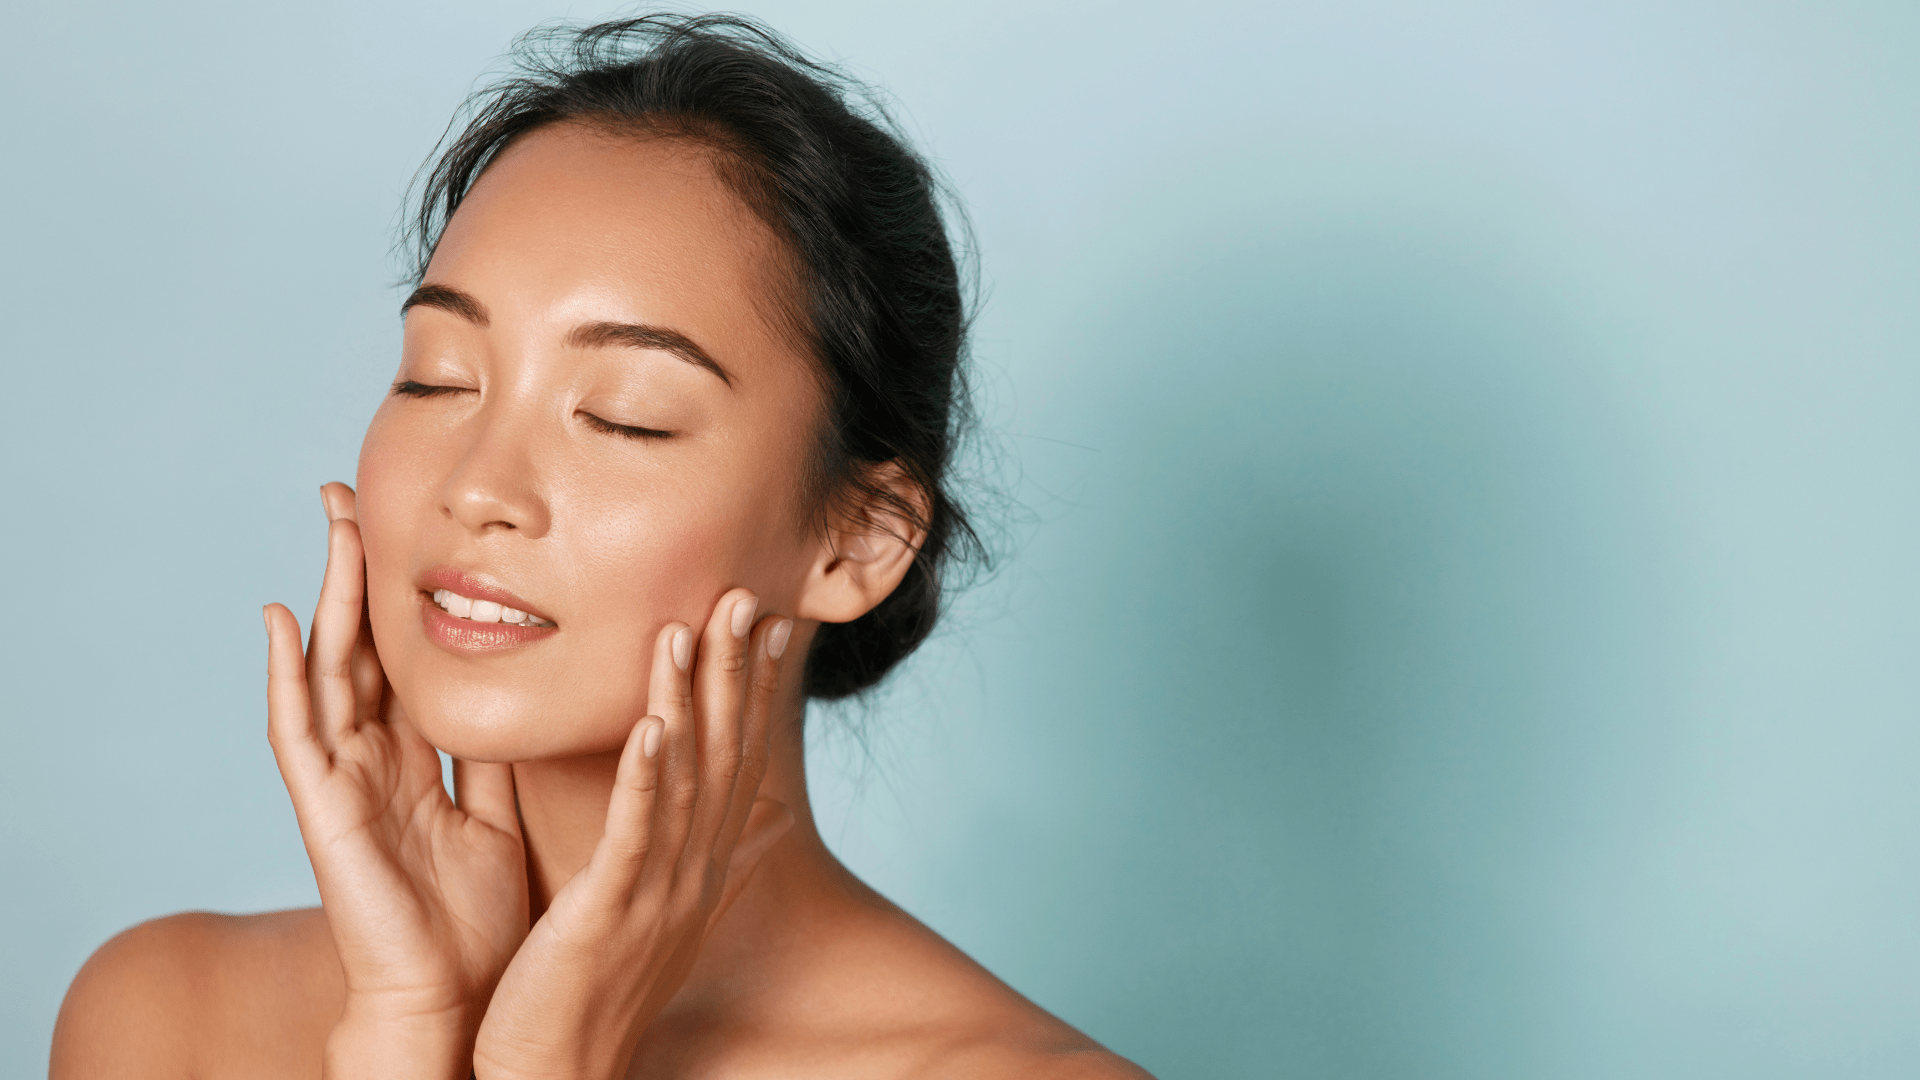 Pecan benefits for skin - Improved skin barrier function